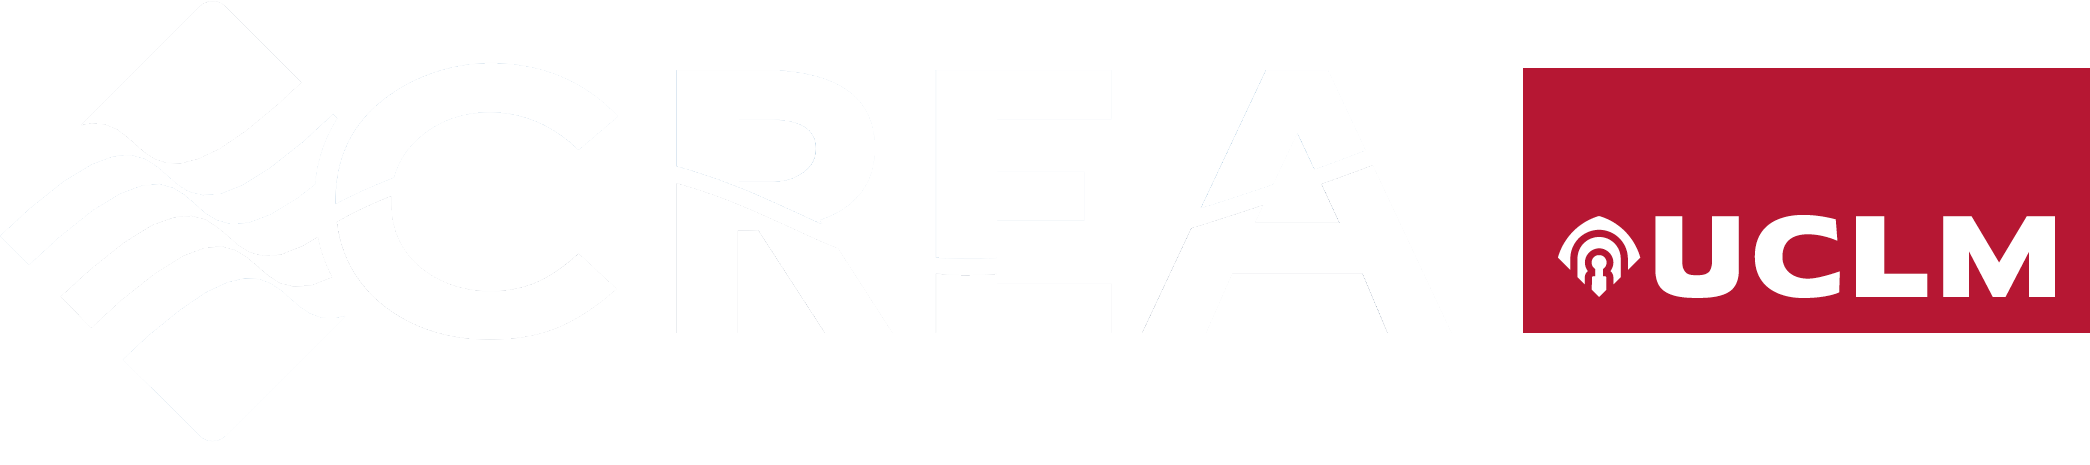 CREA - Centro Regional de Estudios del Agua